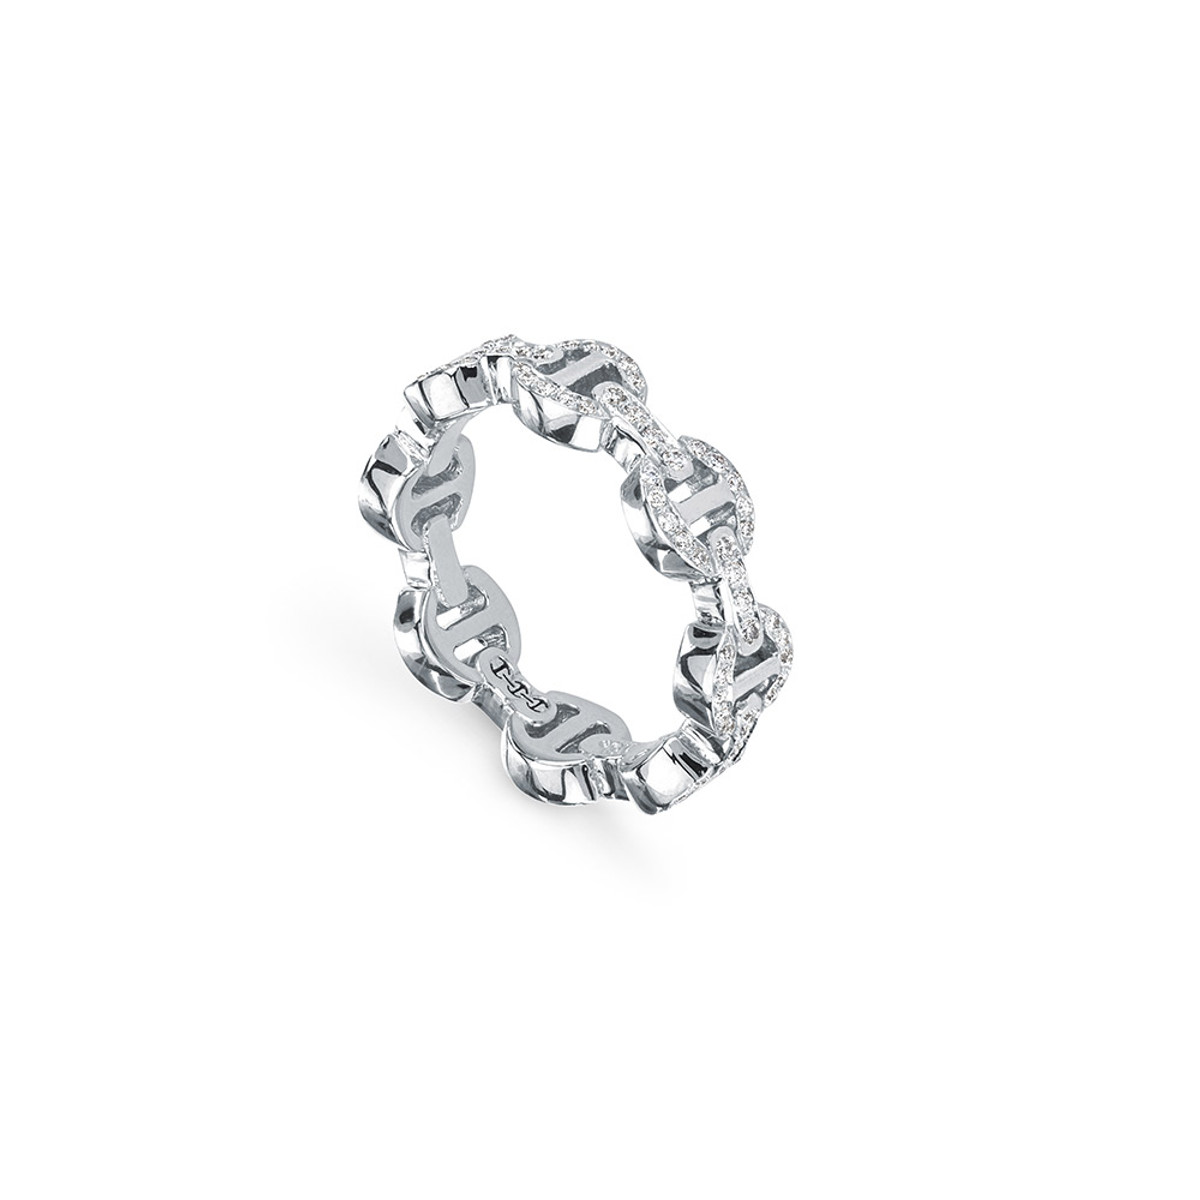 Hoorsenbuhs 18K White Gold Heritage Dame Diamond Tri-Link Antiquated Ring-57482 Product Image